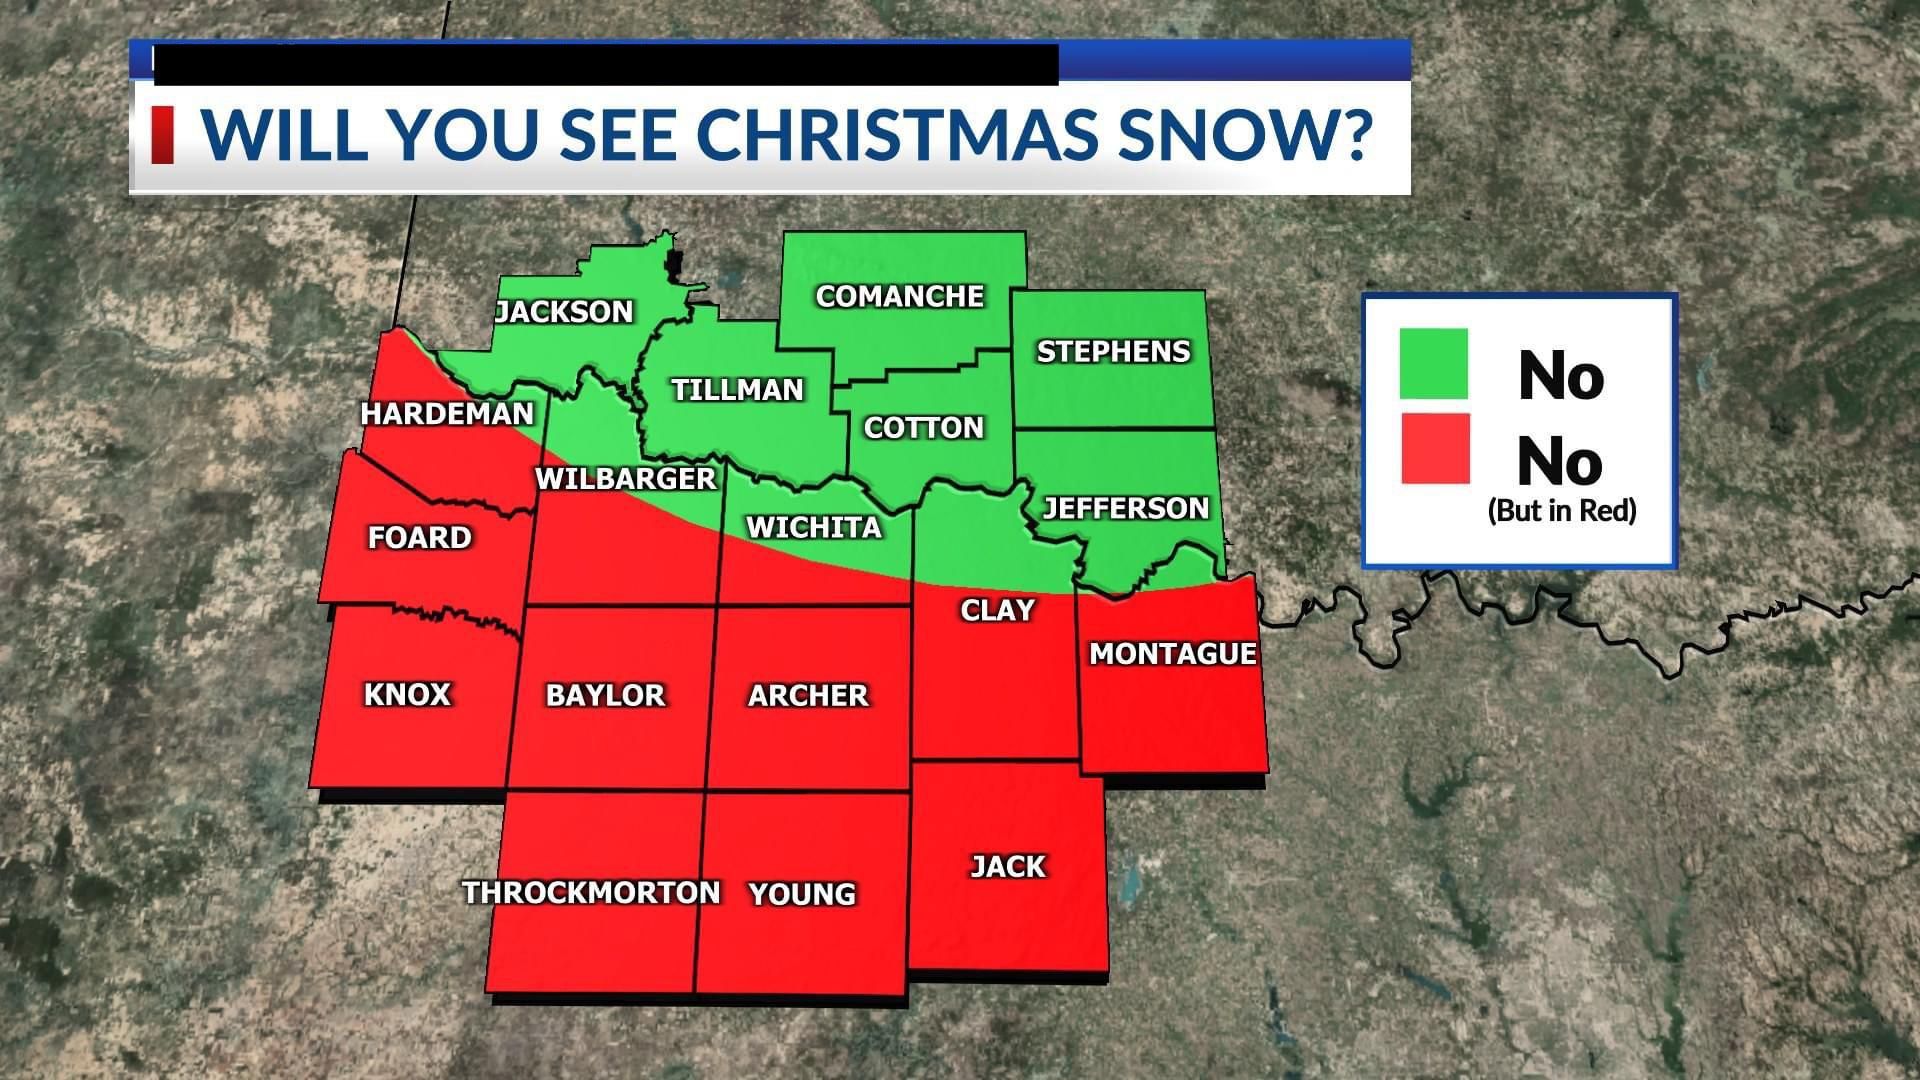 Local Meteorologist shares likelihood of Christmas snow.